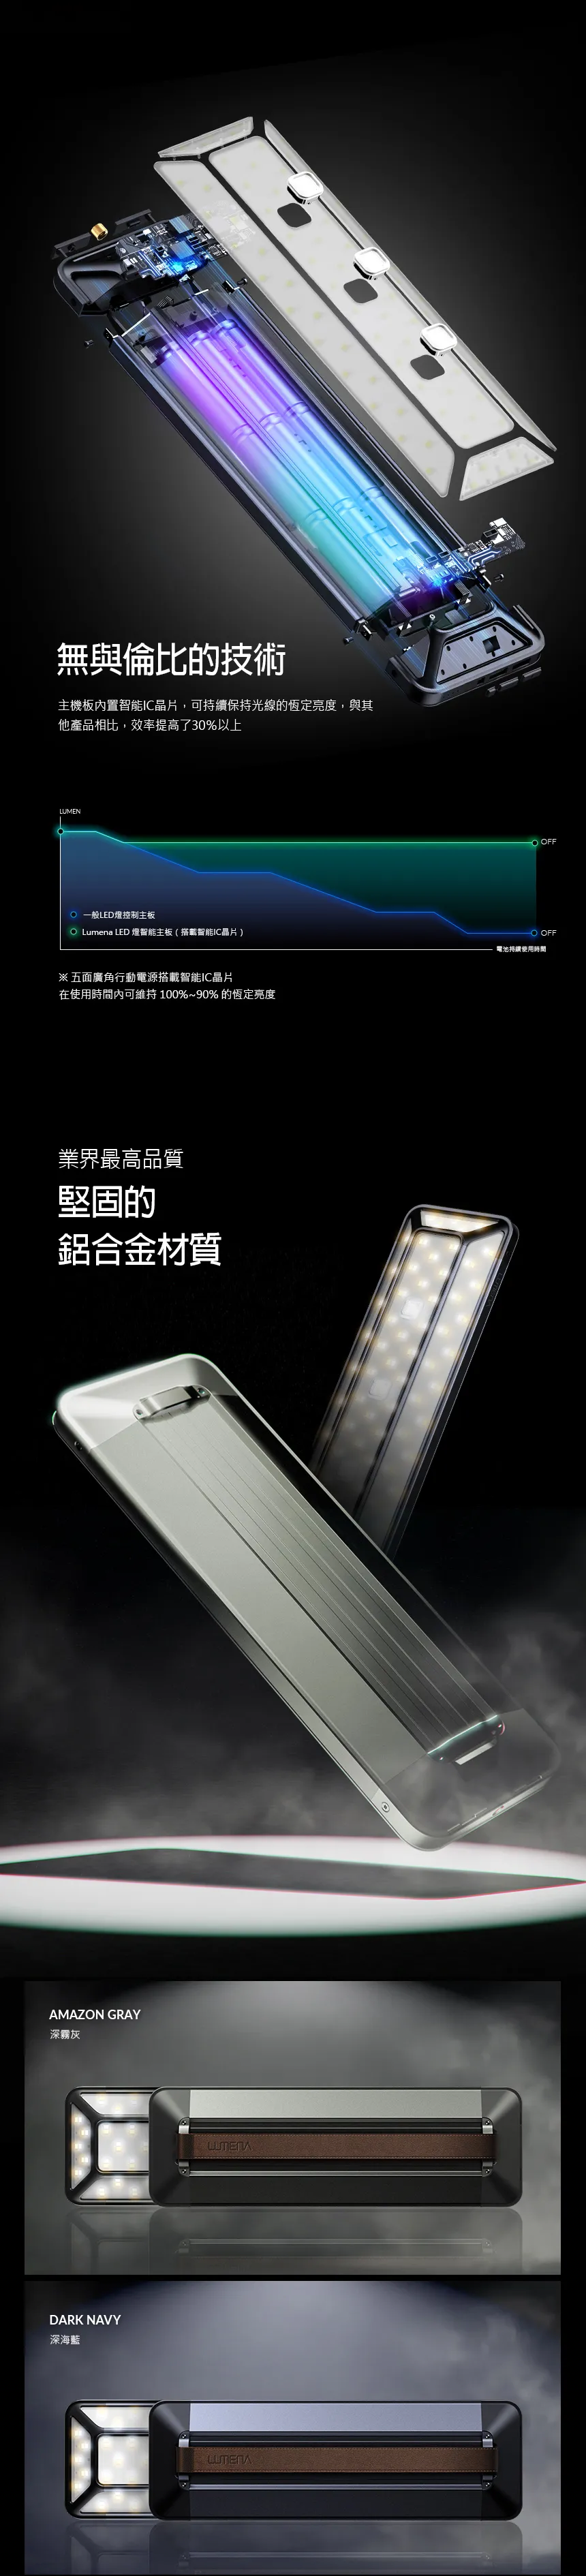 【N9】LUMENA MAX 五面廣角行動電源LED燈 N9新力作